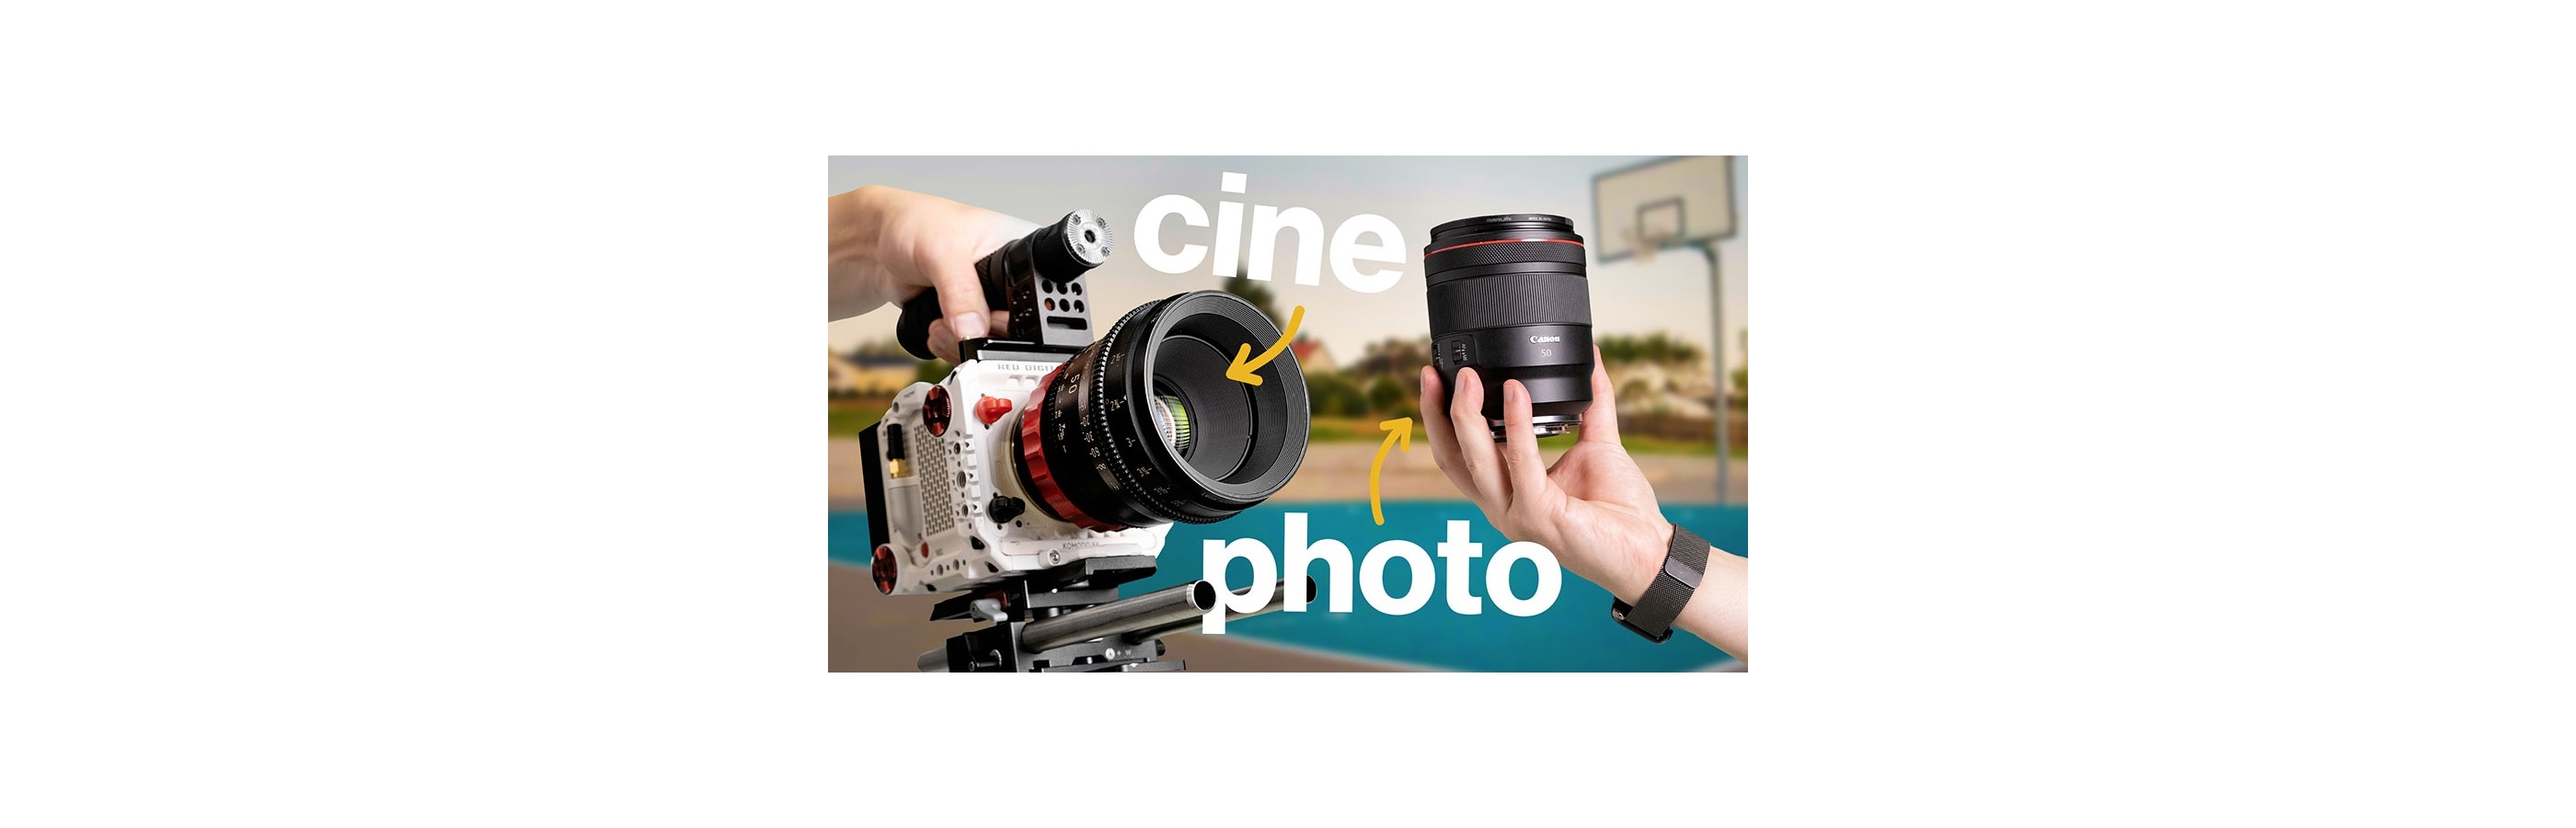 Cine vs Photo Lenses: Which Are More Cinematic?